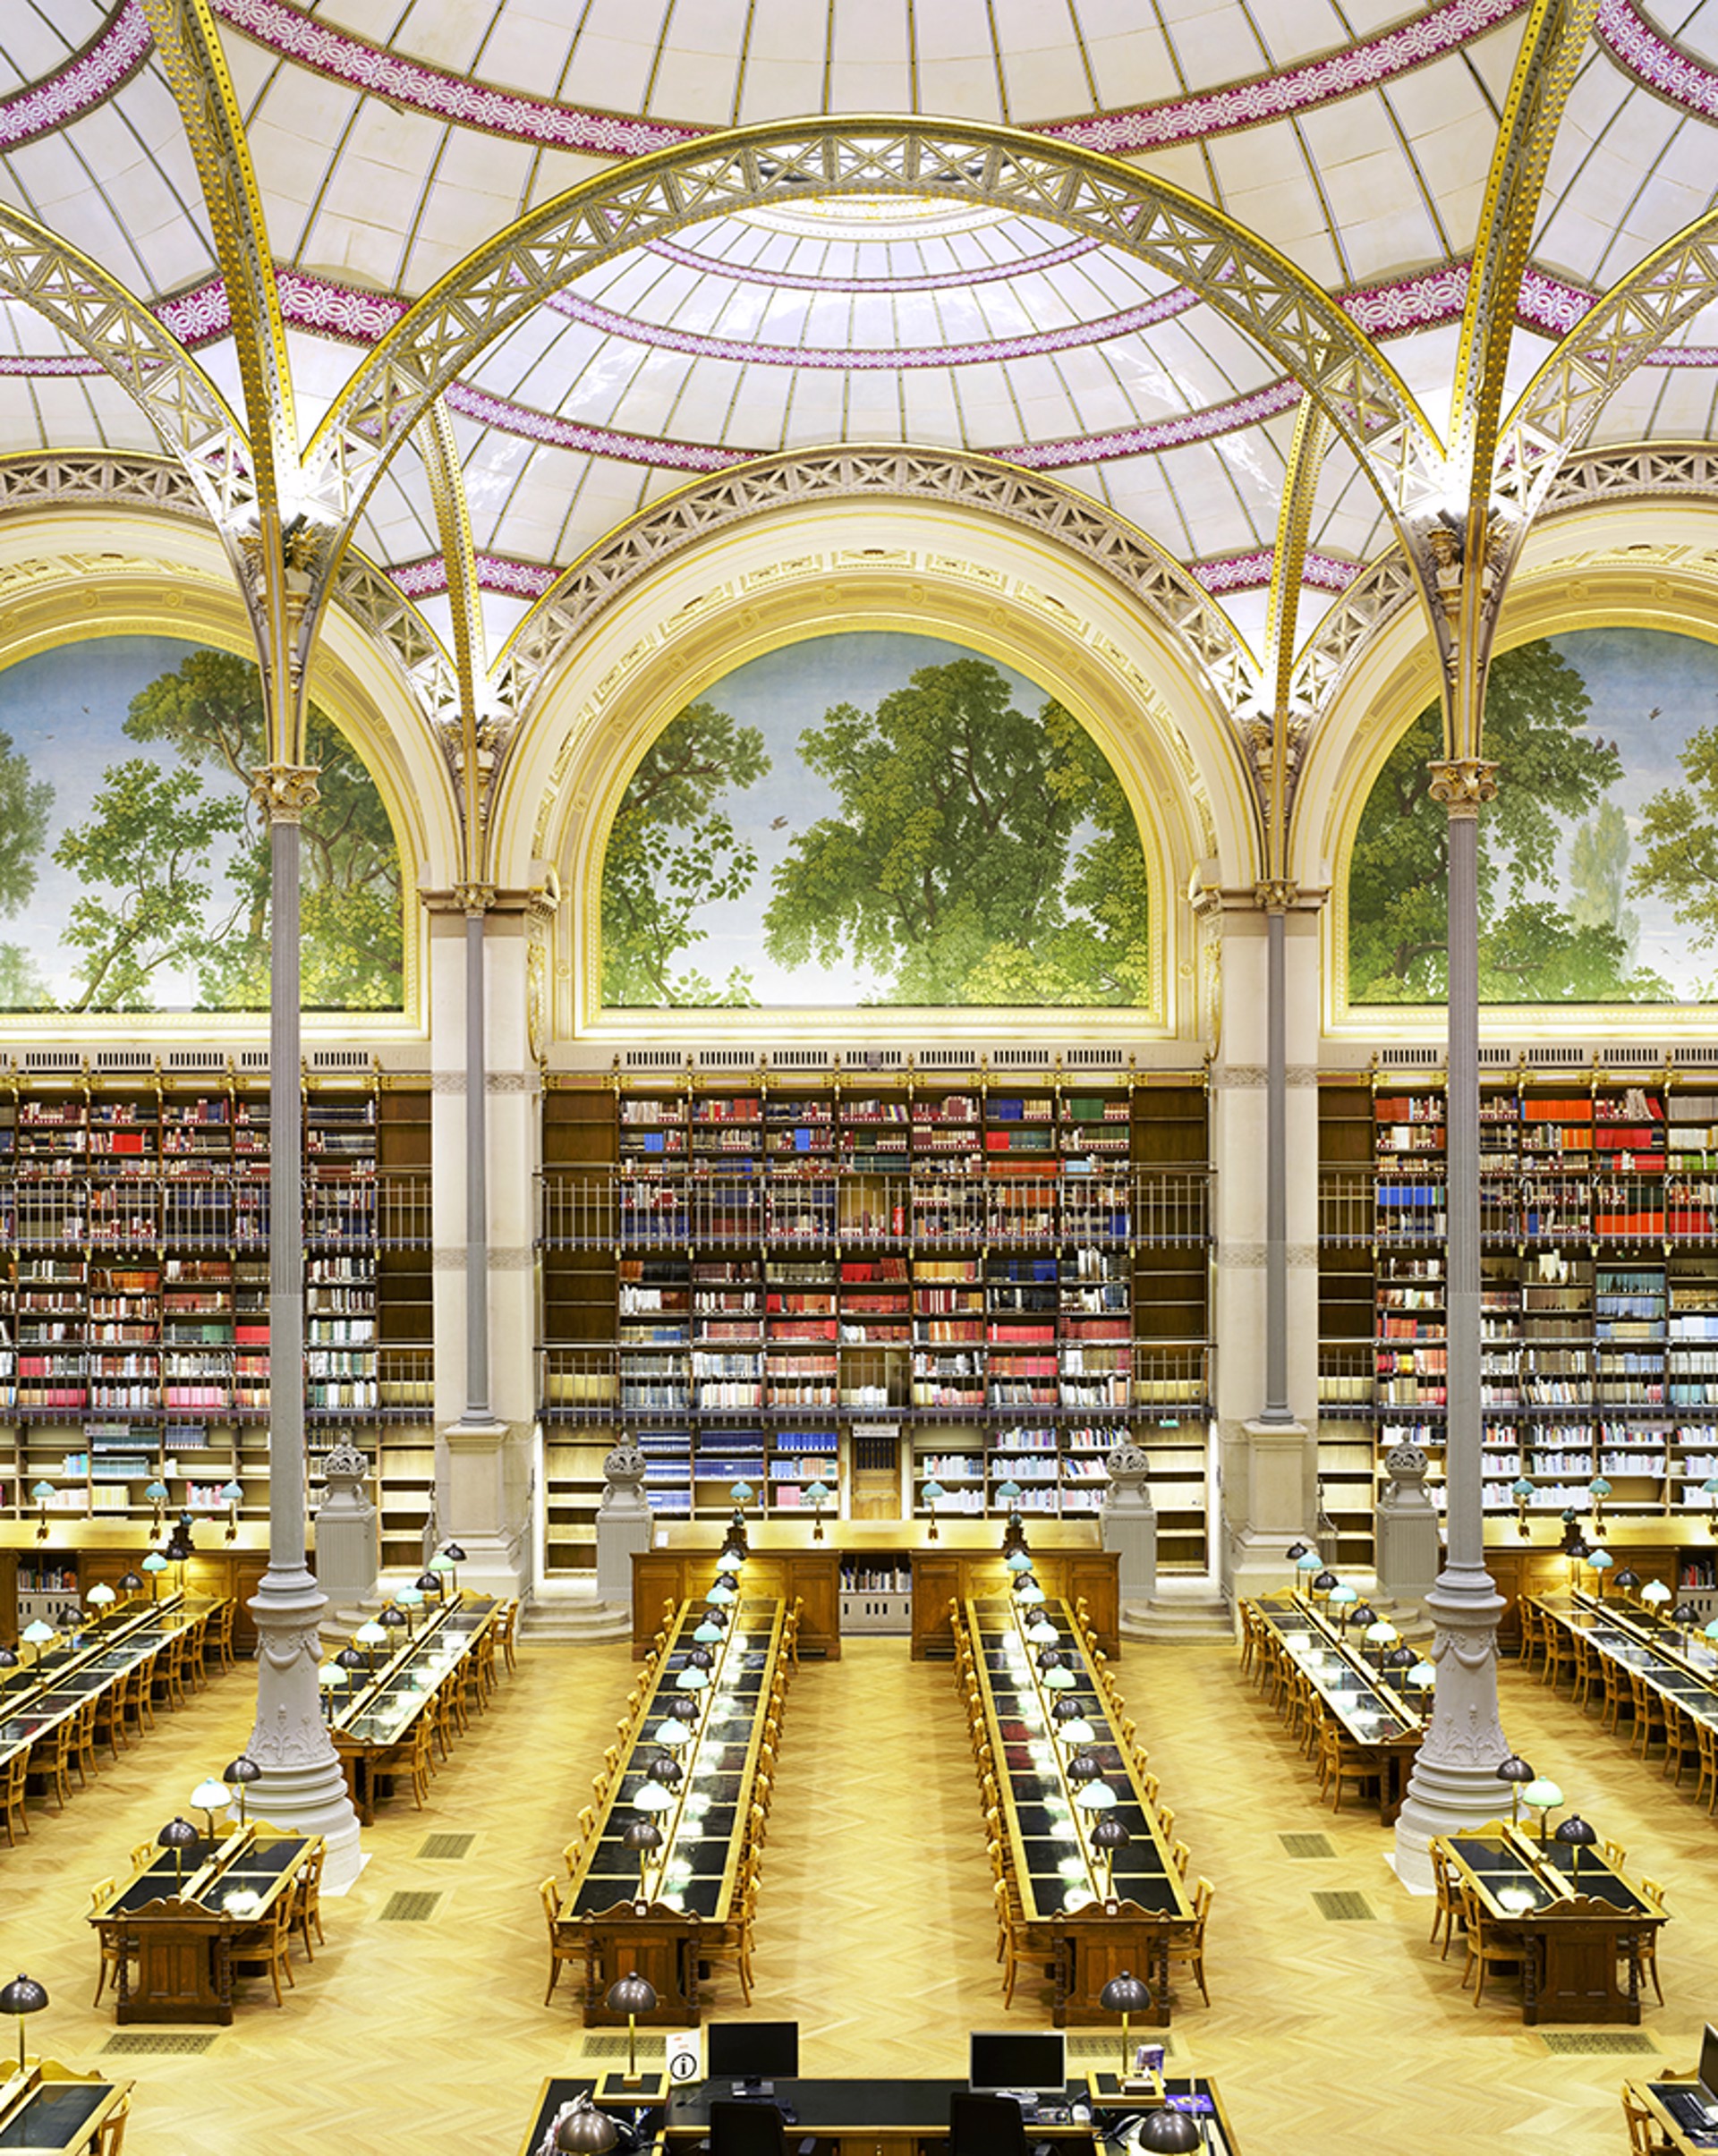 Salle Labrouste IV Library, Paris by Reinhard Goerner